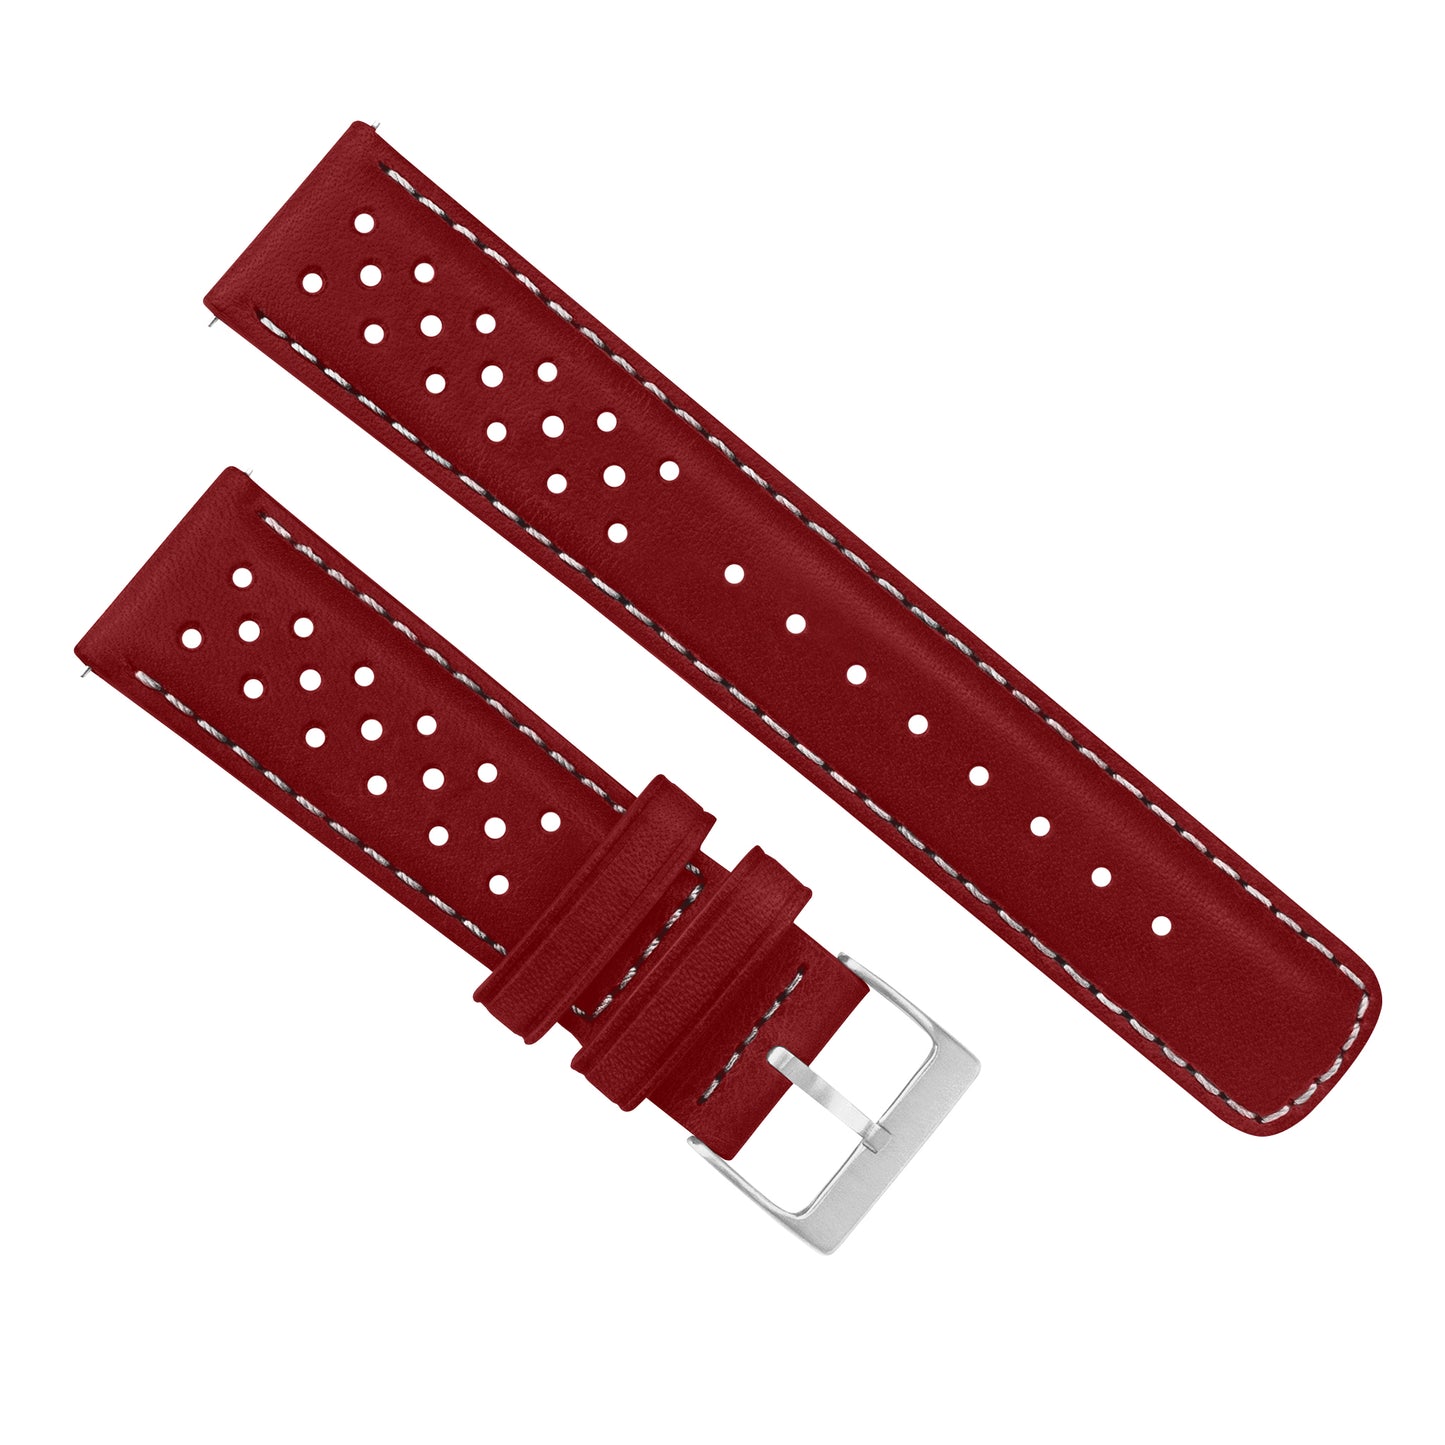 Samsung Galaxy Watch3 Racing Horween Leather Crimson Red Linen Stitch Watch Band